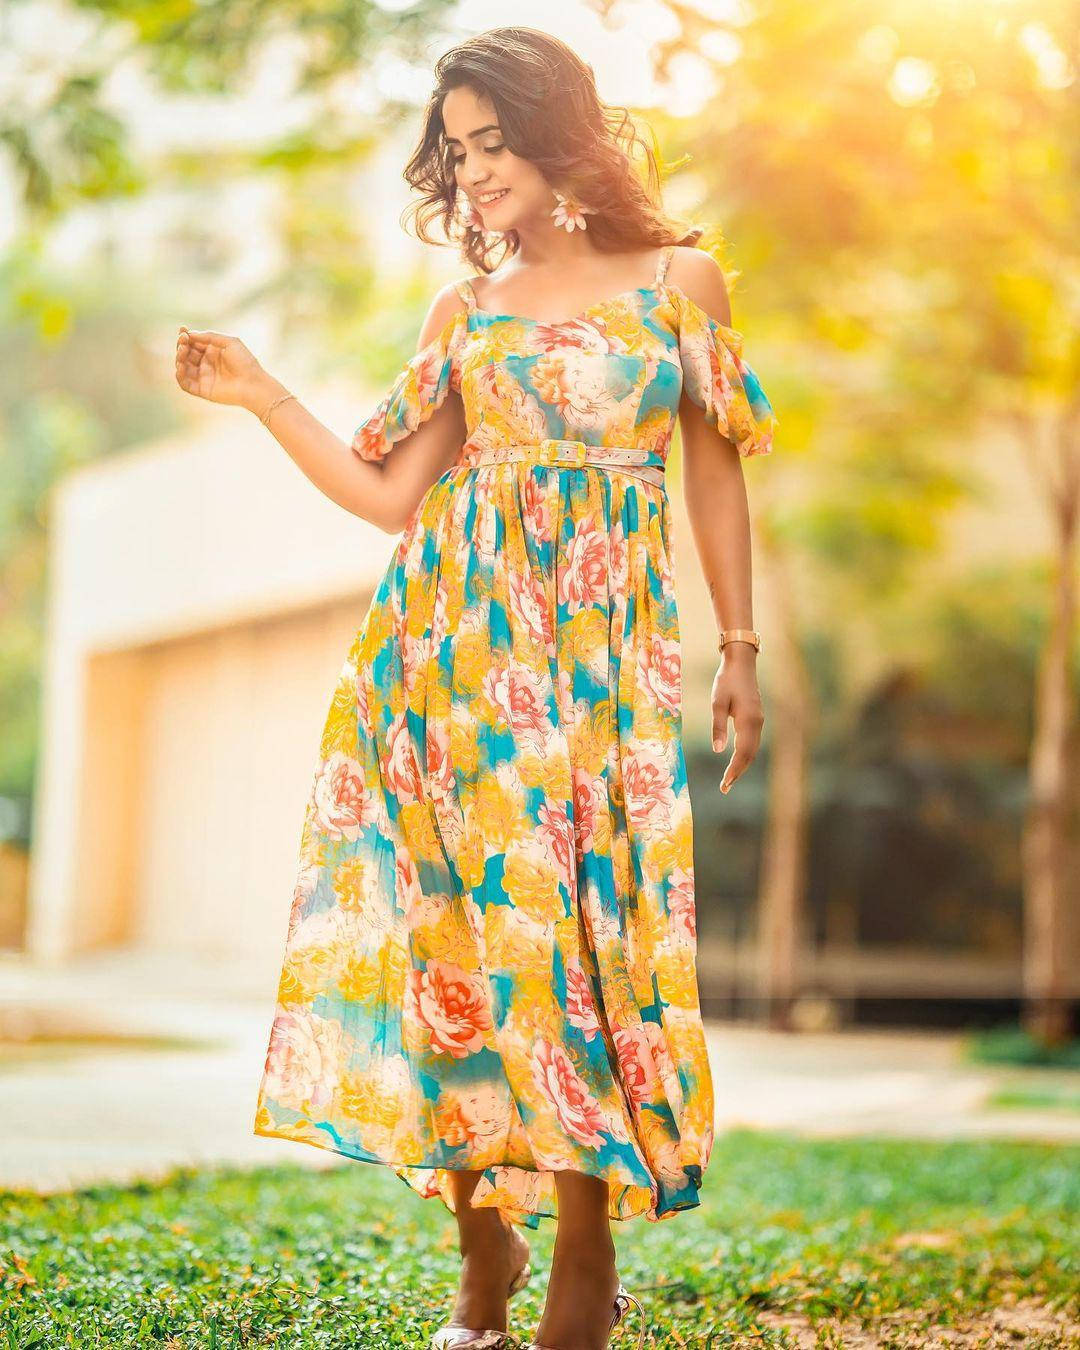 Nisha Guragain Captivating In Yellow Floral Dress